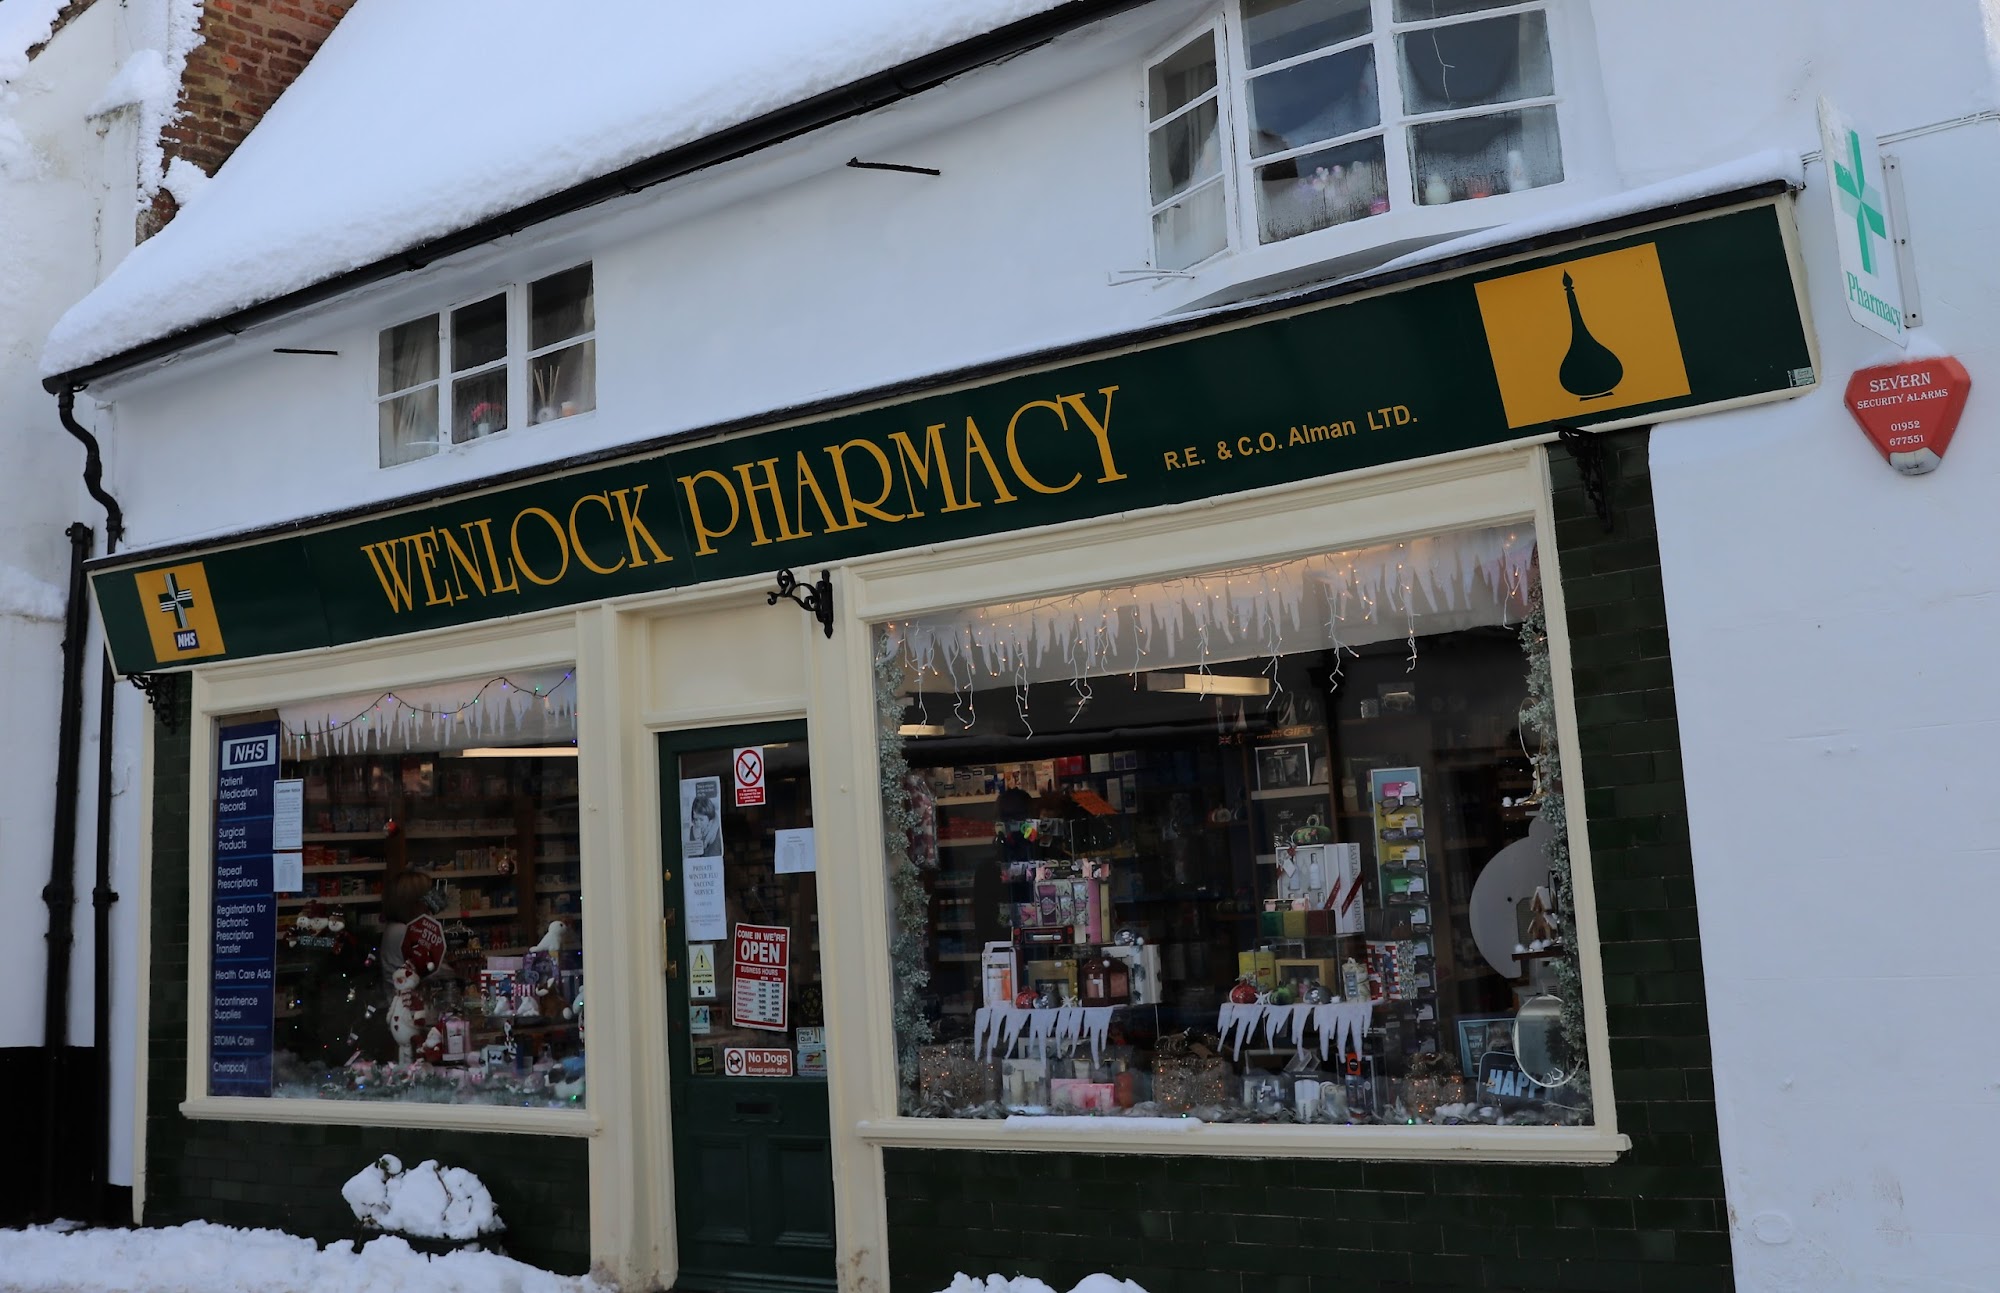 Wenlock Pharmacy